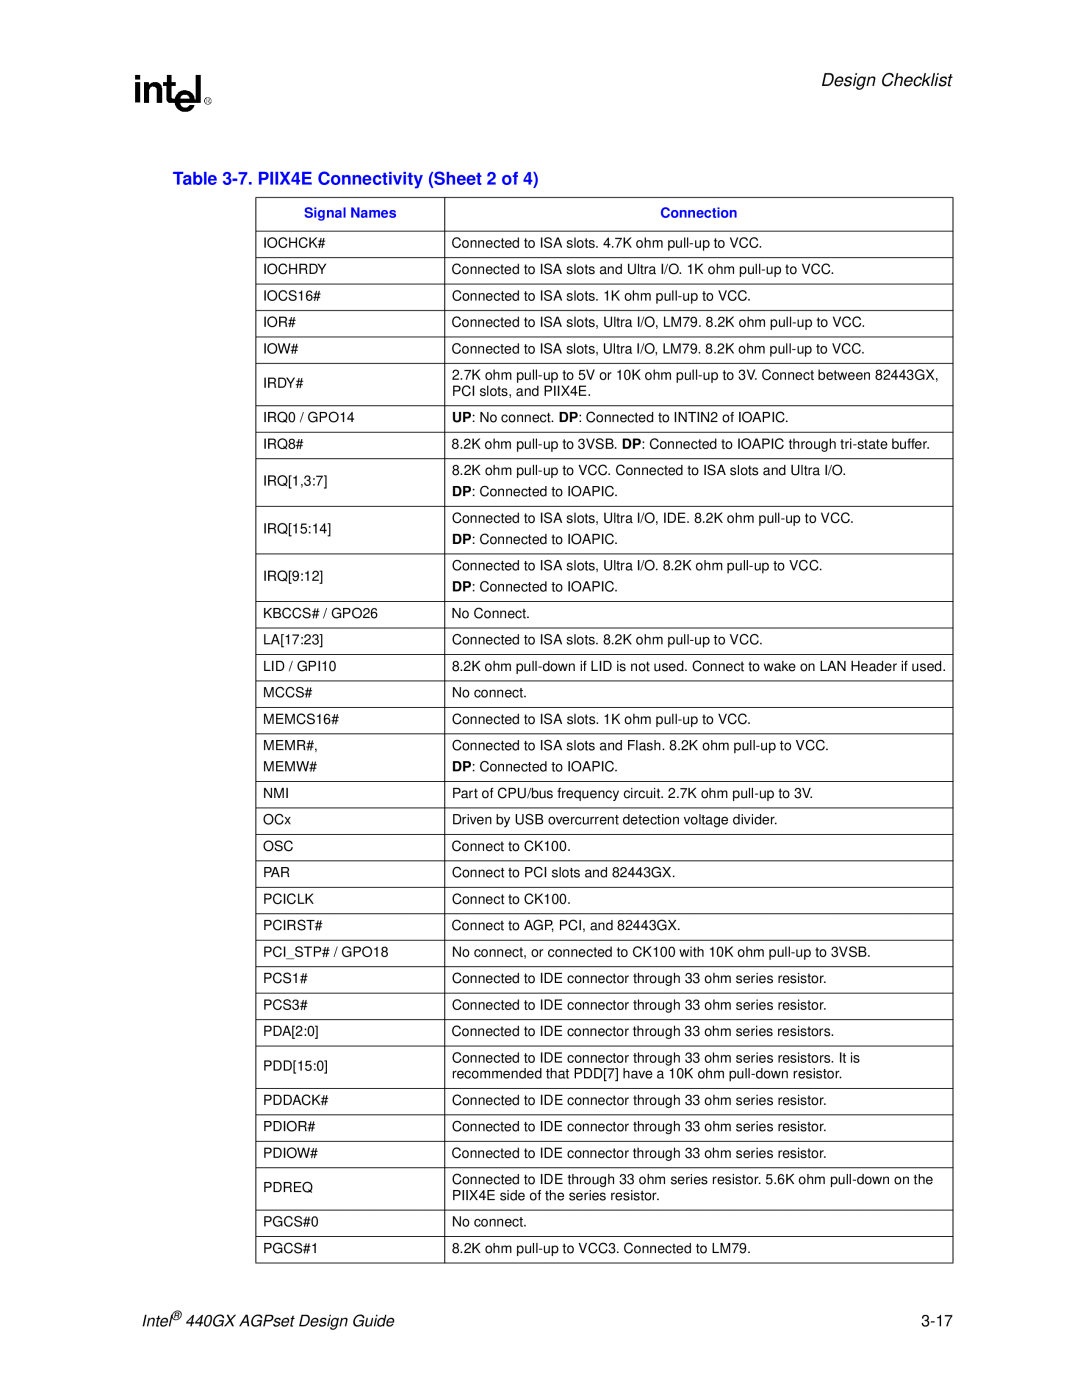 Intel manual 7. PIIX4E Connectivity Sheet 2 of, Design Checklist, Intel440GX AGPset Design Guide, 3-17 